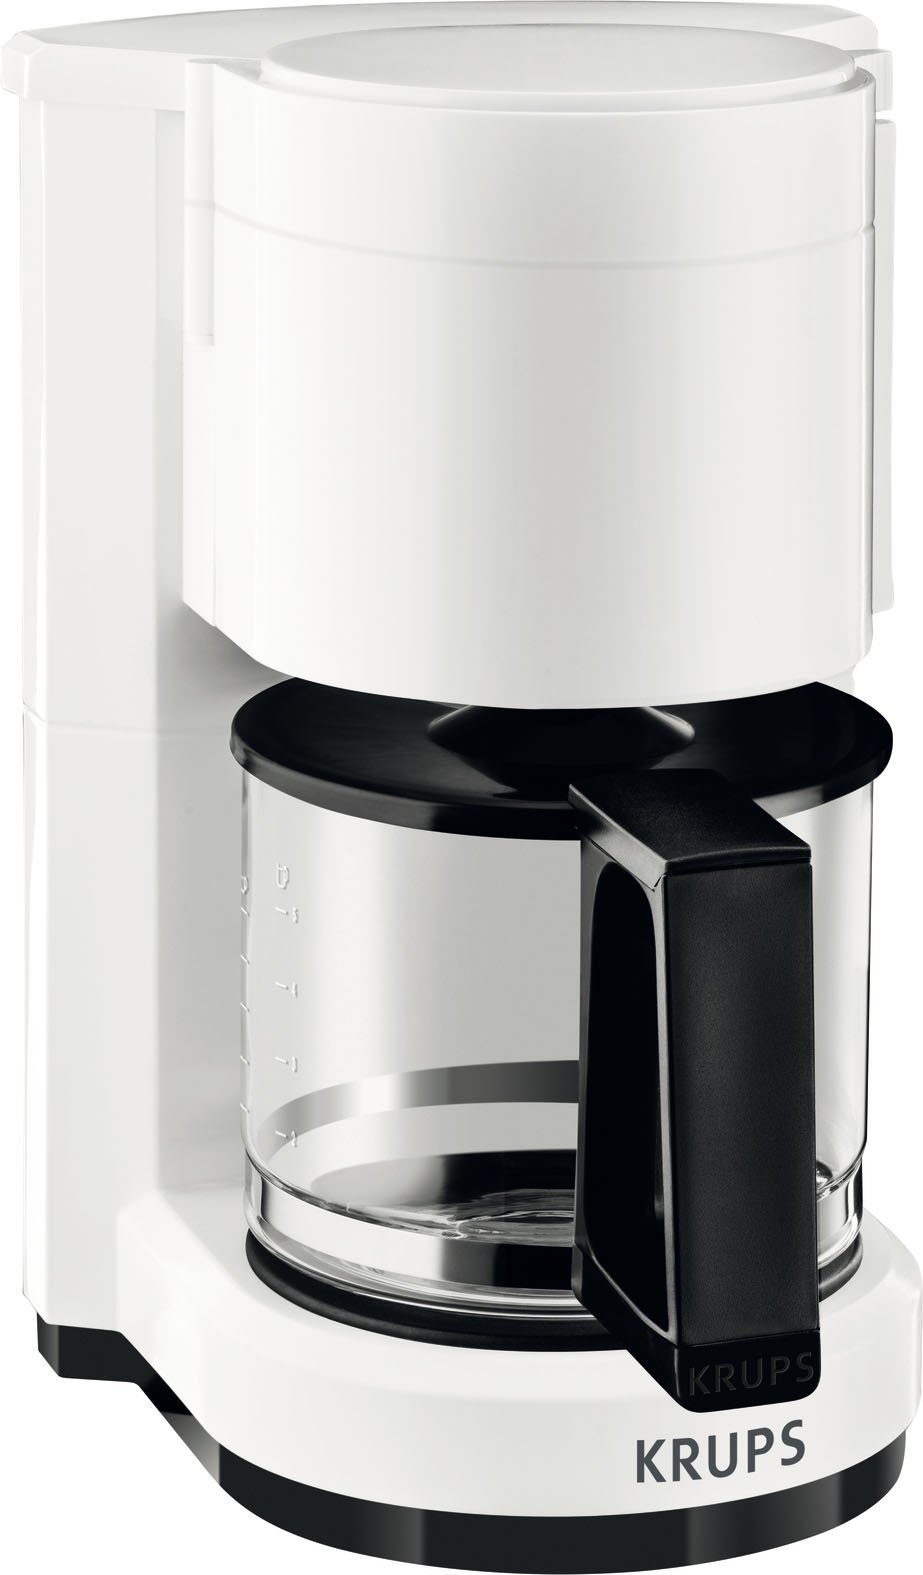 0,6l Kaffeekanne, für Aromacafe, herausnehmbarer Filterhalter, Filterkaffeemaschine Tassen Kaffee, Warmhaltefunktion F18301 Krups 5-7